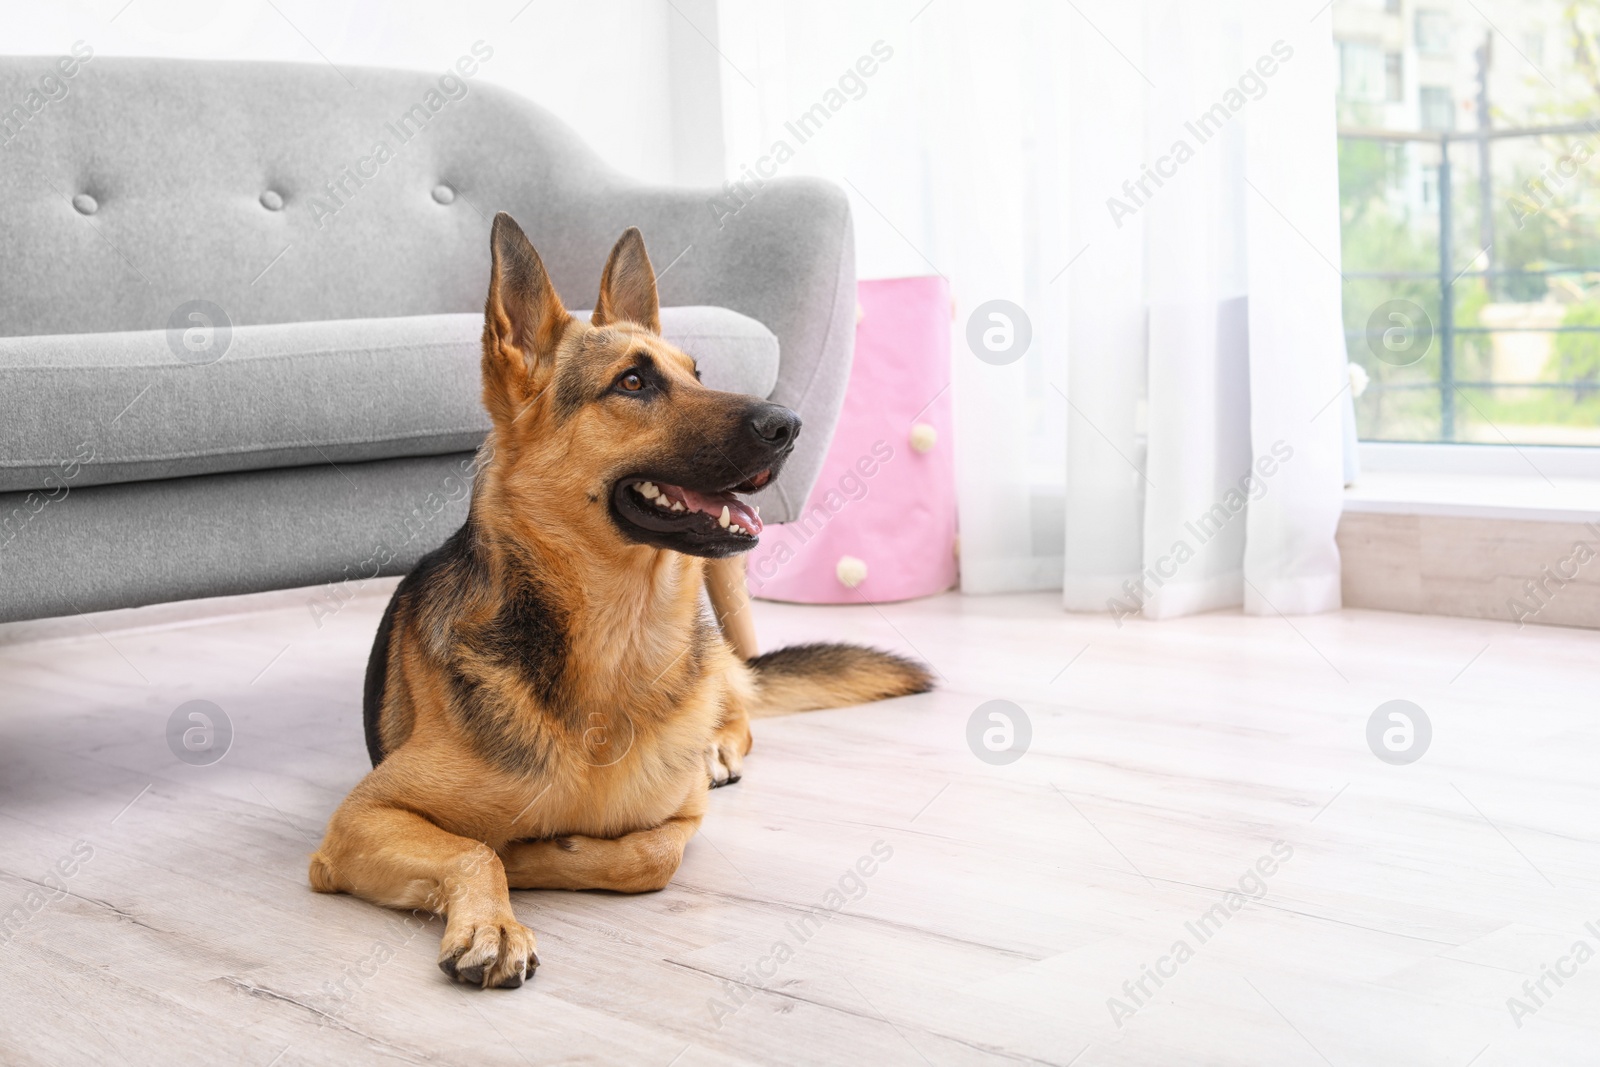 Photo of Adorable German shepherd dog near sofa indoors